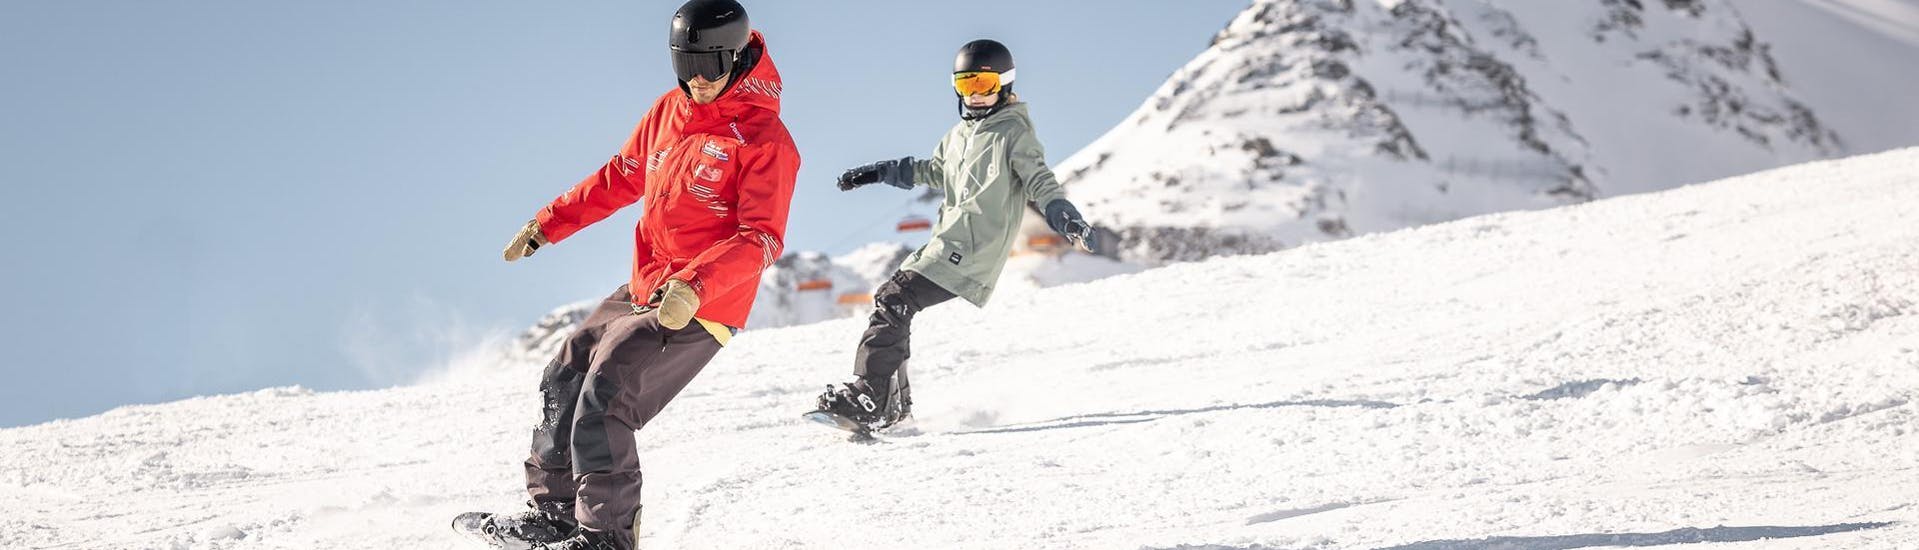 A boy is learning how to snowboard in Sölden in Austria.